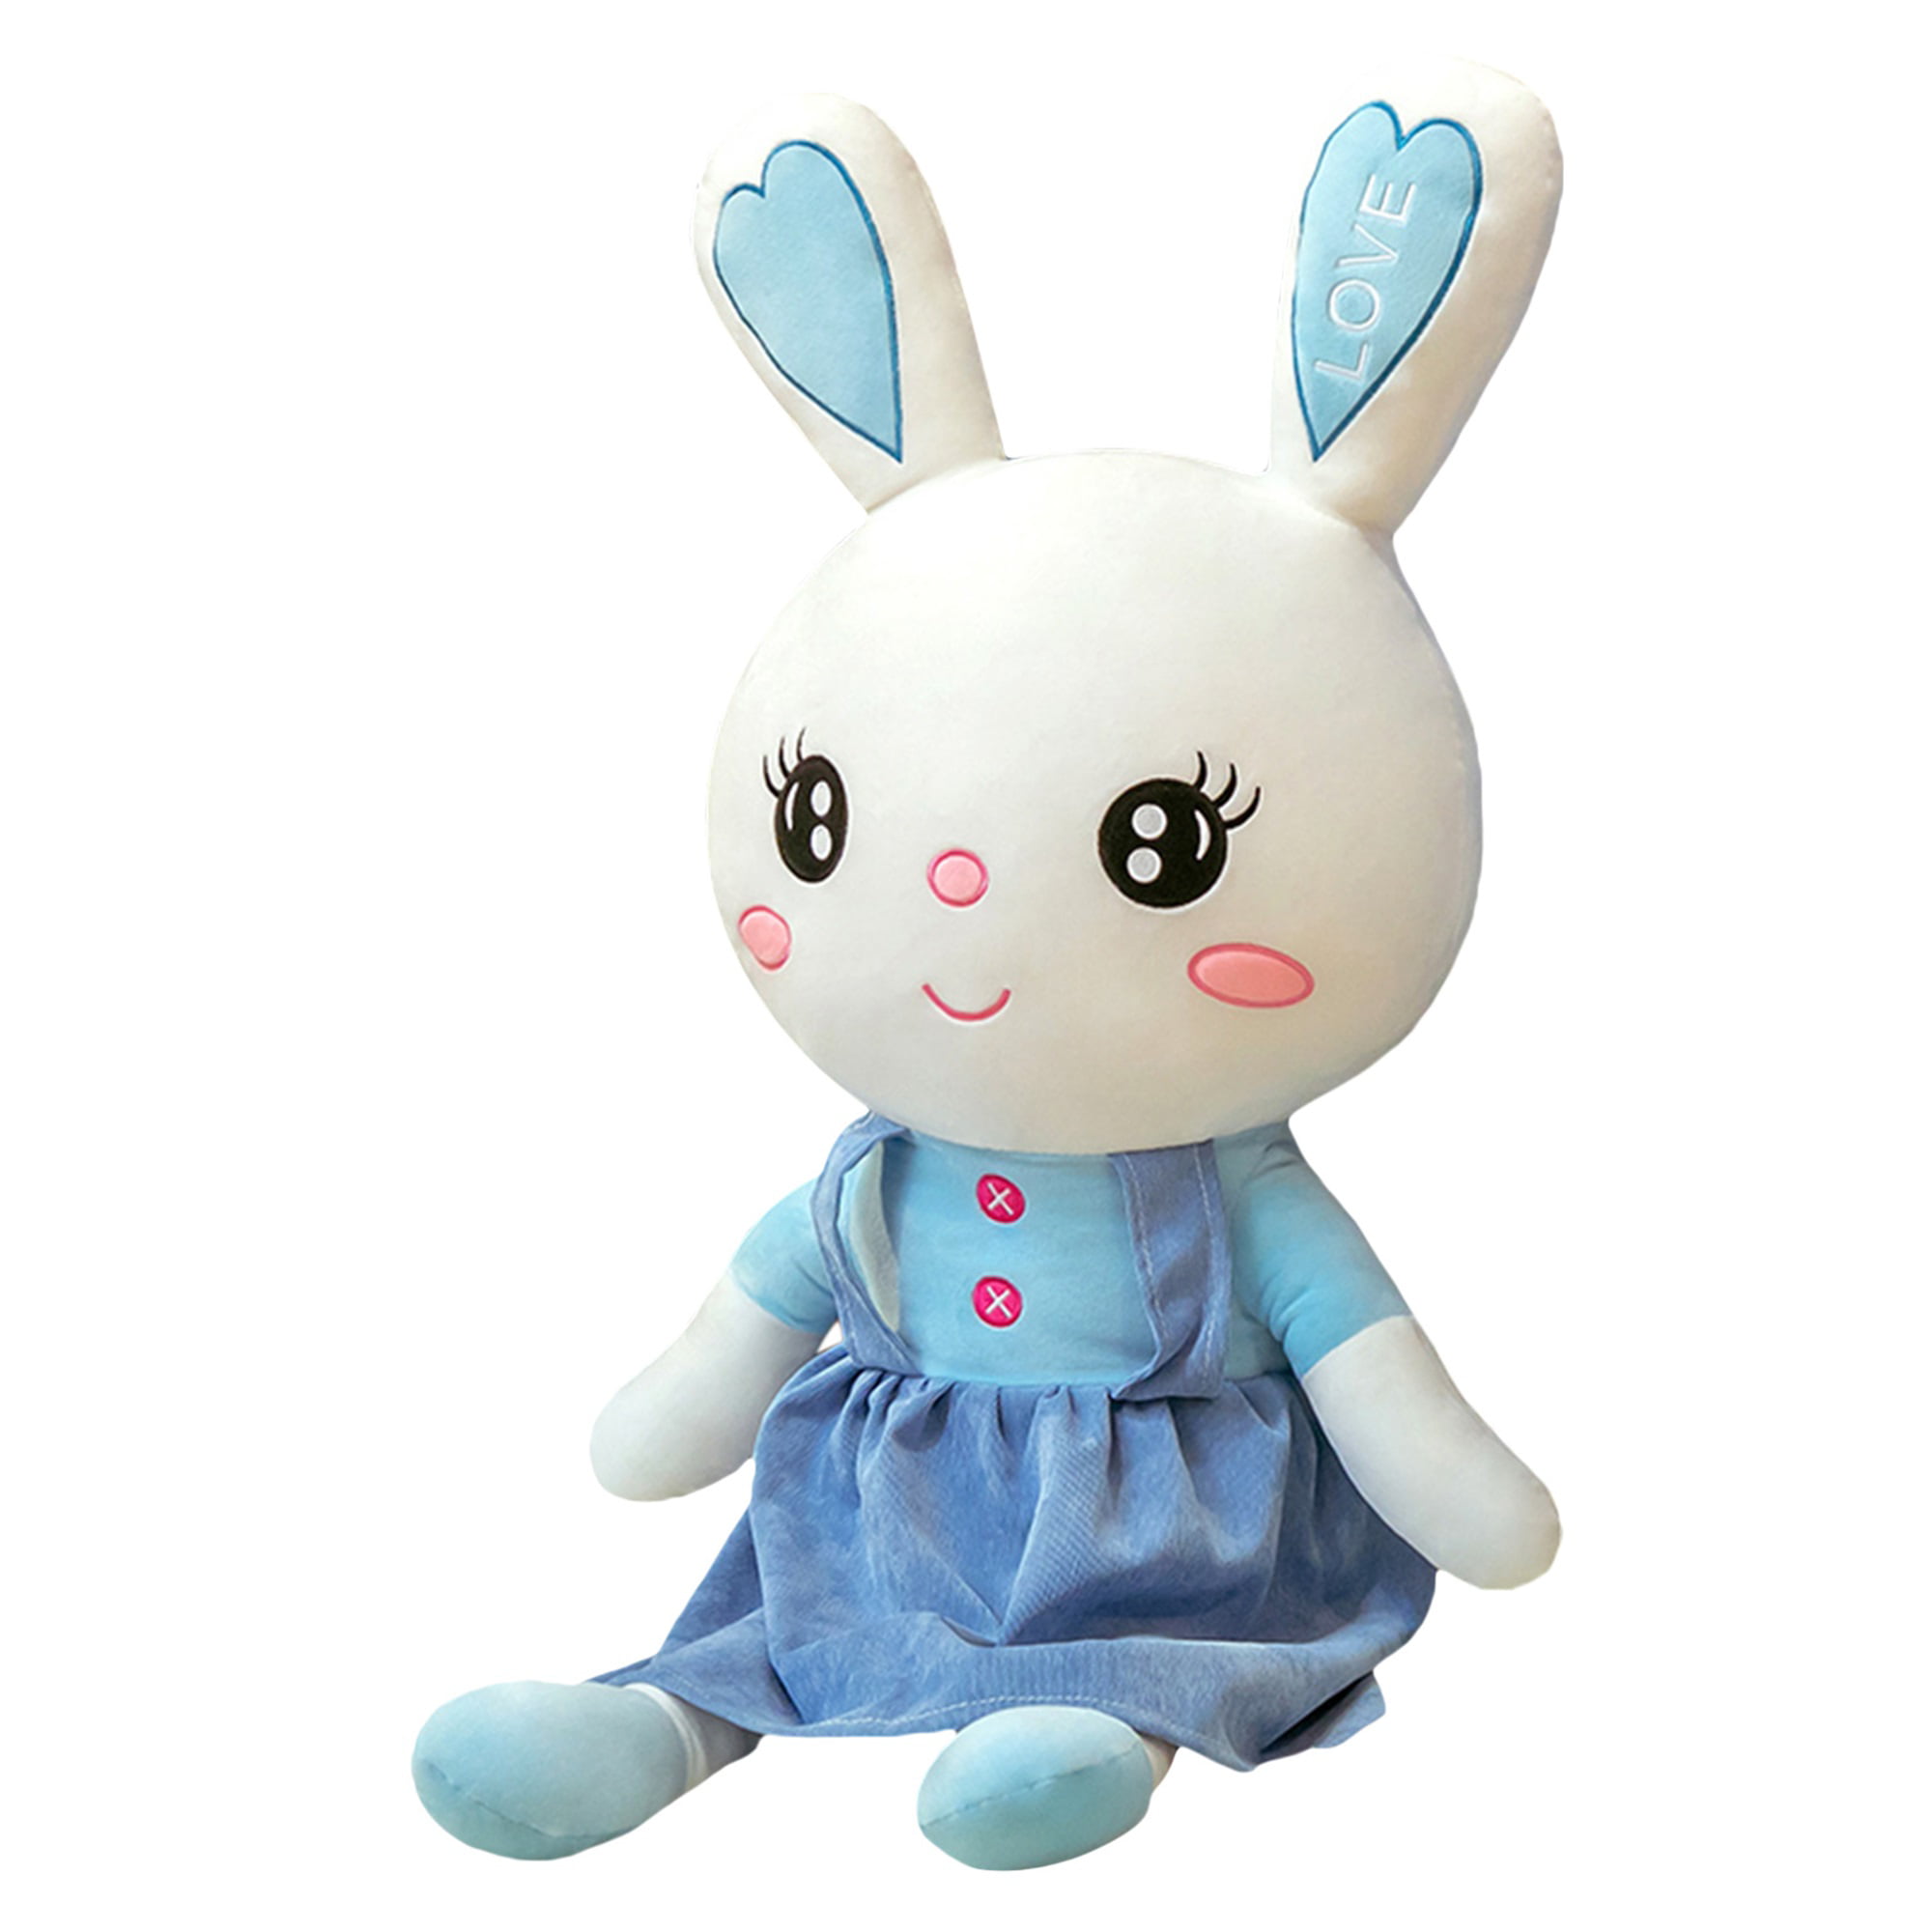 Cute Miffy Rabbit Plush Toys Pillow Cushion Animal Bunny Baby Kids Bedroom Decor 